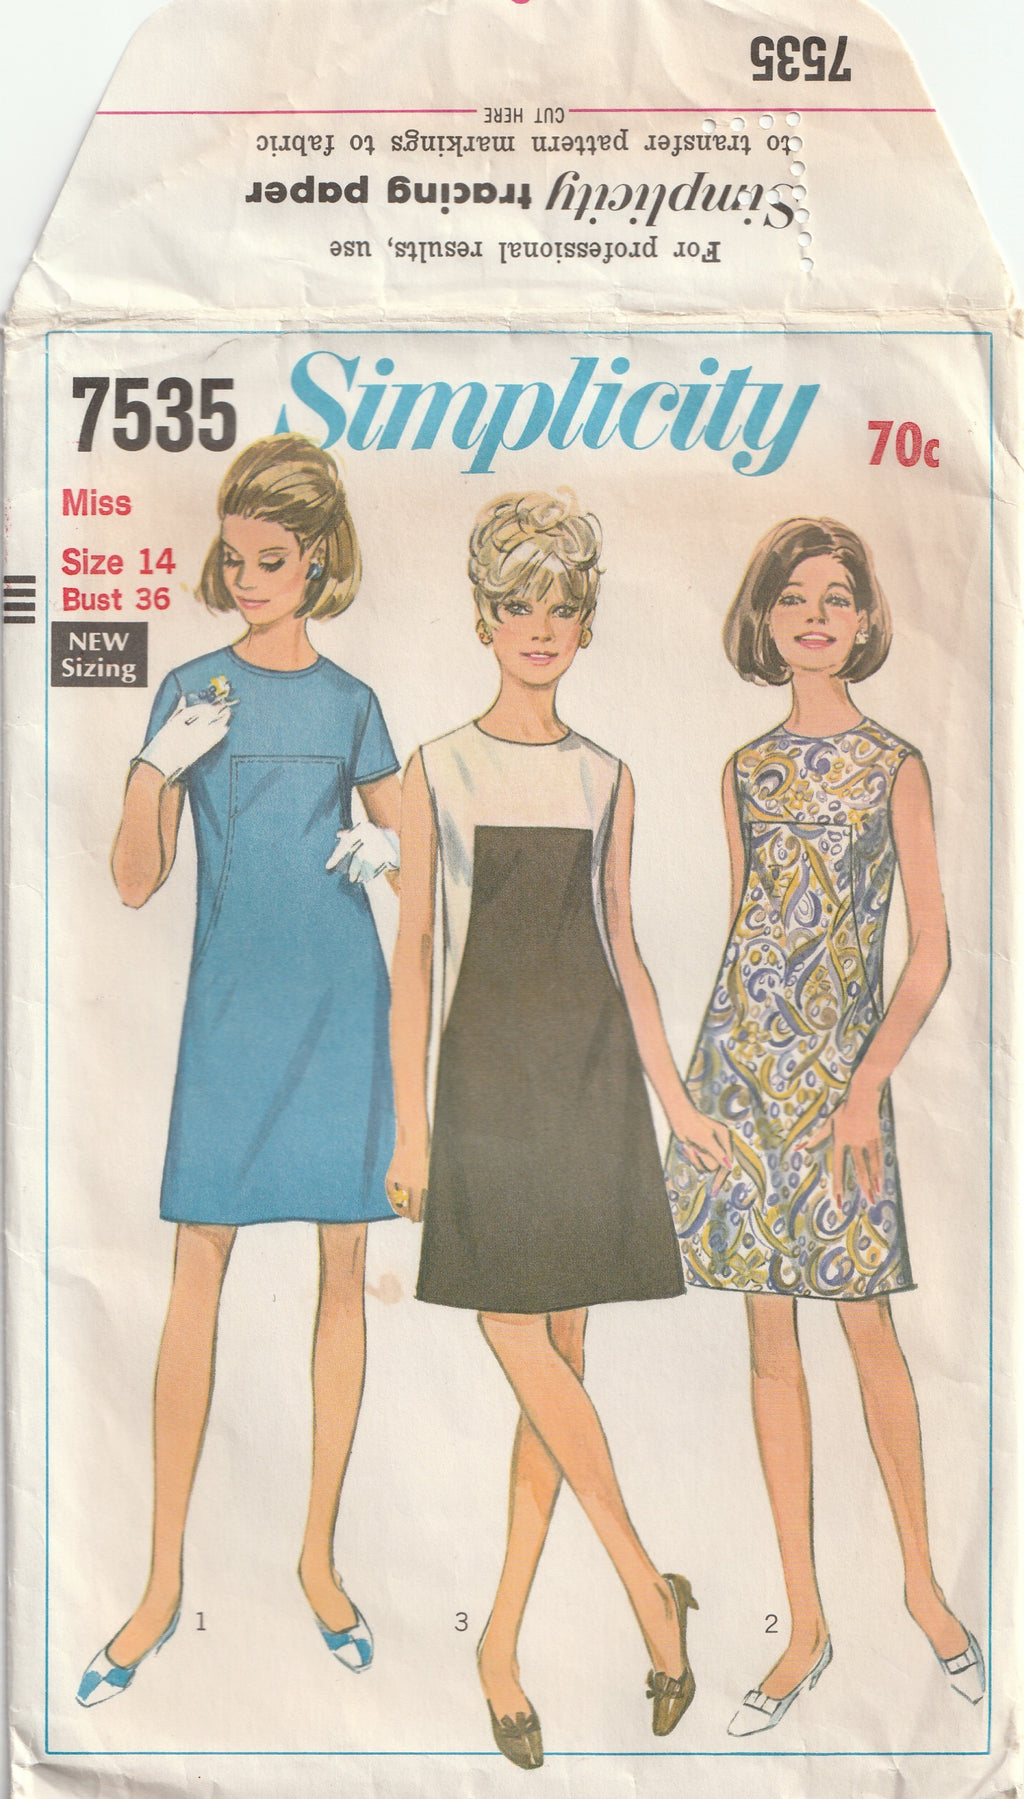 1960s vintage pattern shift A-line dress simplicity 7535 1968 medium